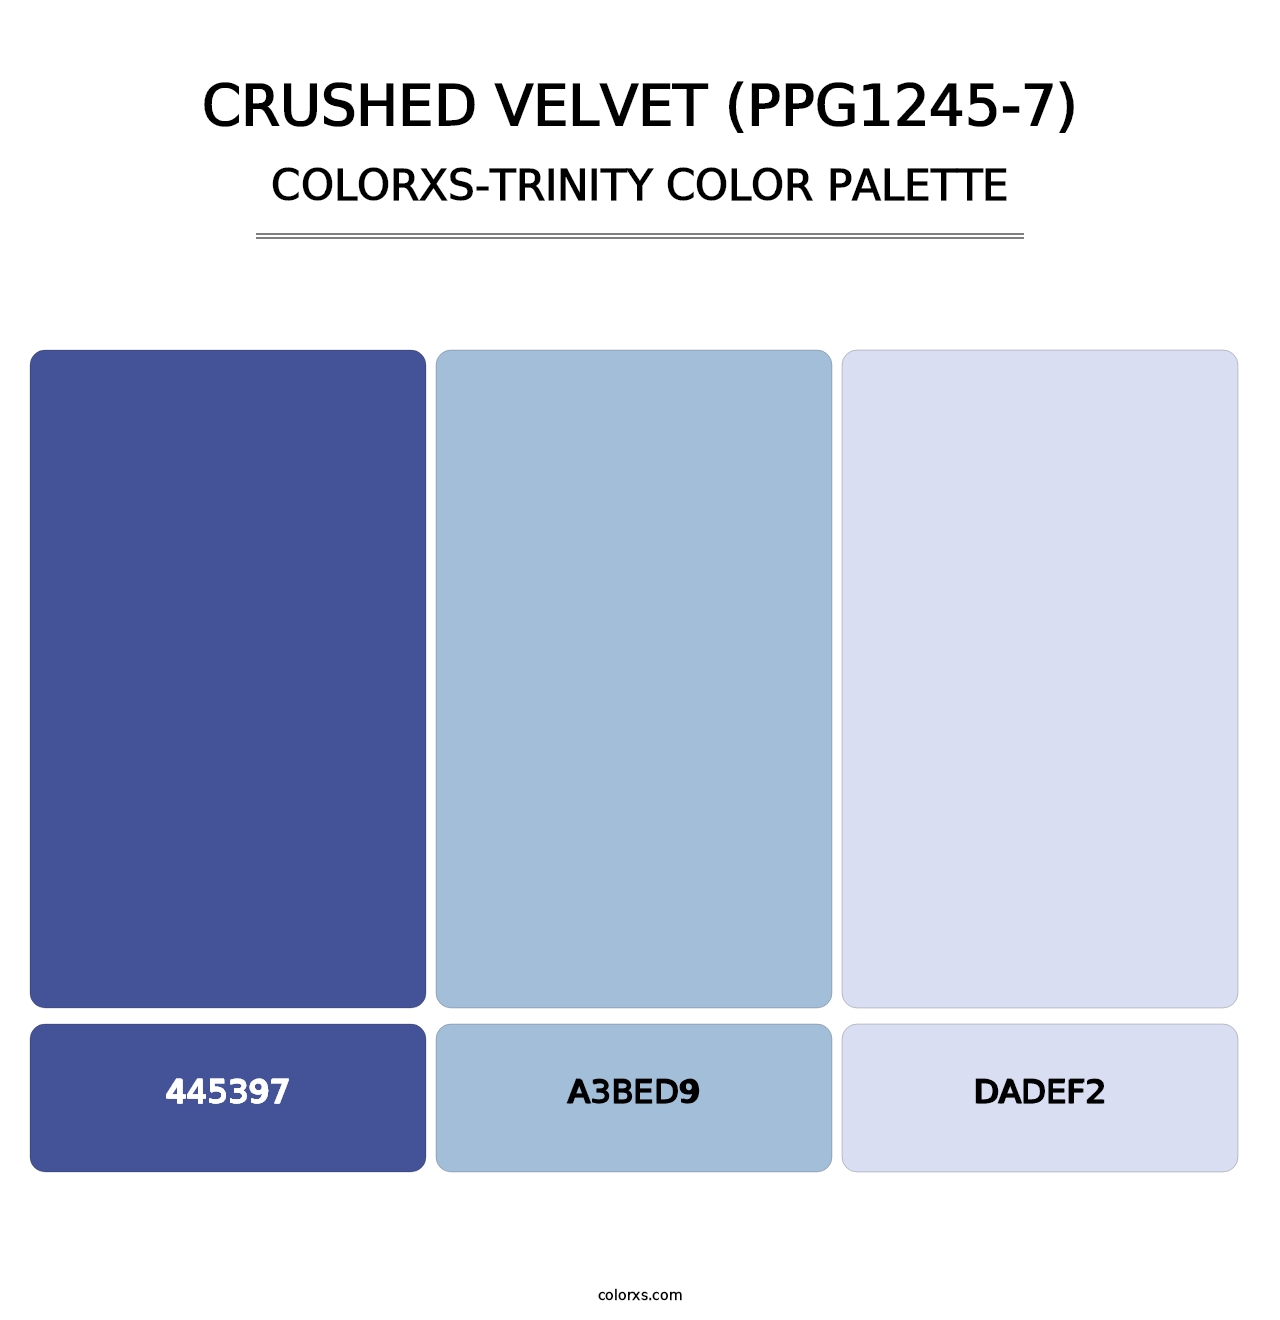 Crushed Velvet (PPG1245-7) - Colorxs Trinity Palette